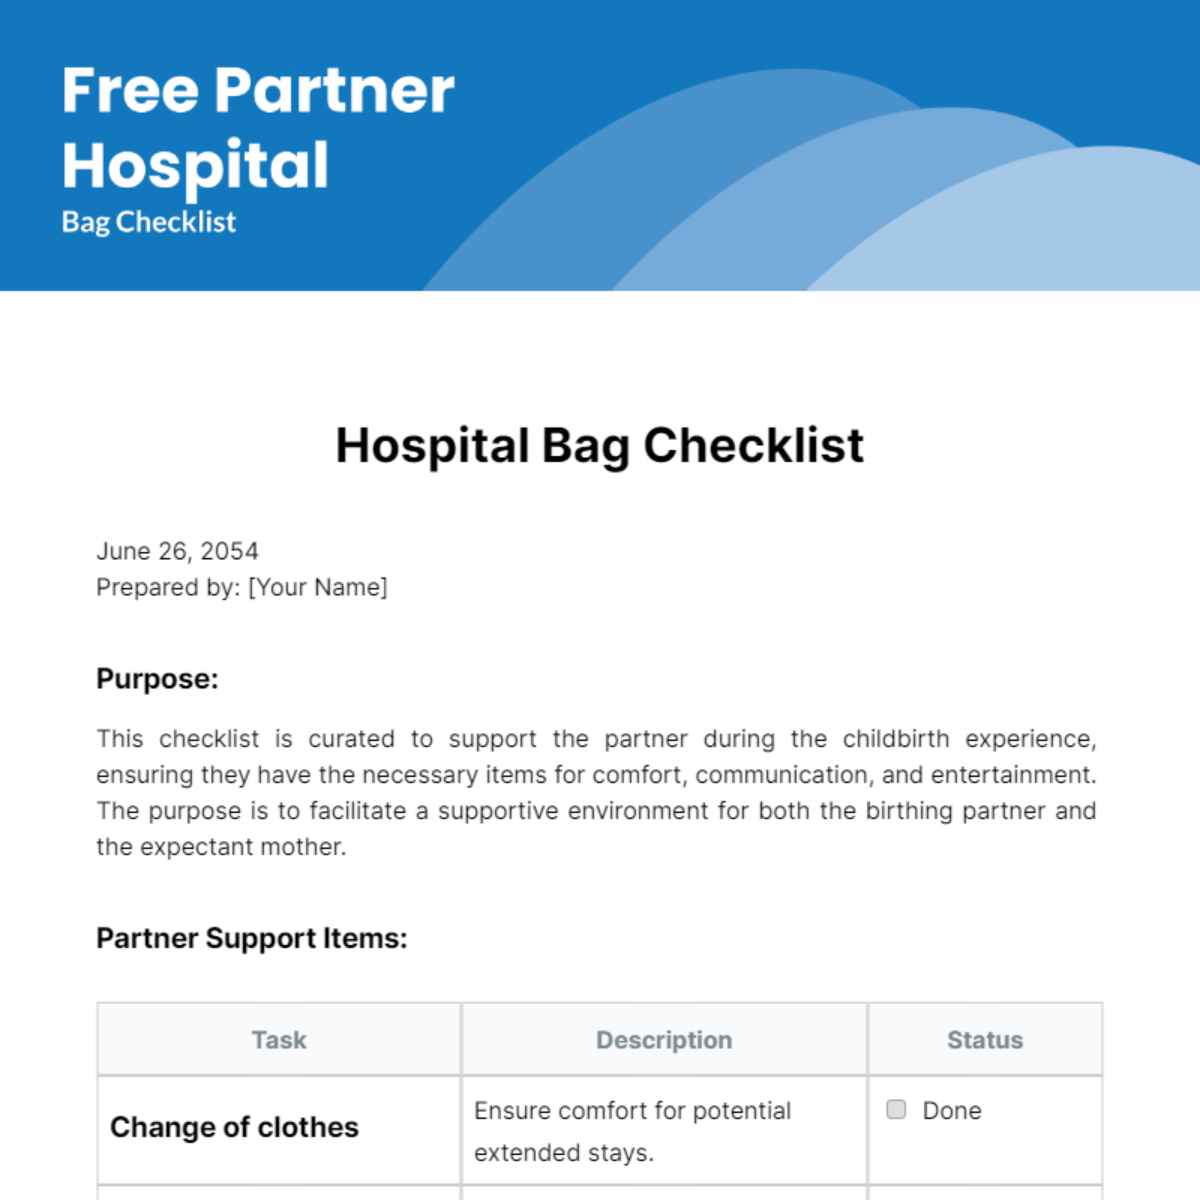 Free Partner Hospital Bag Checklist Template